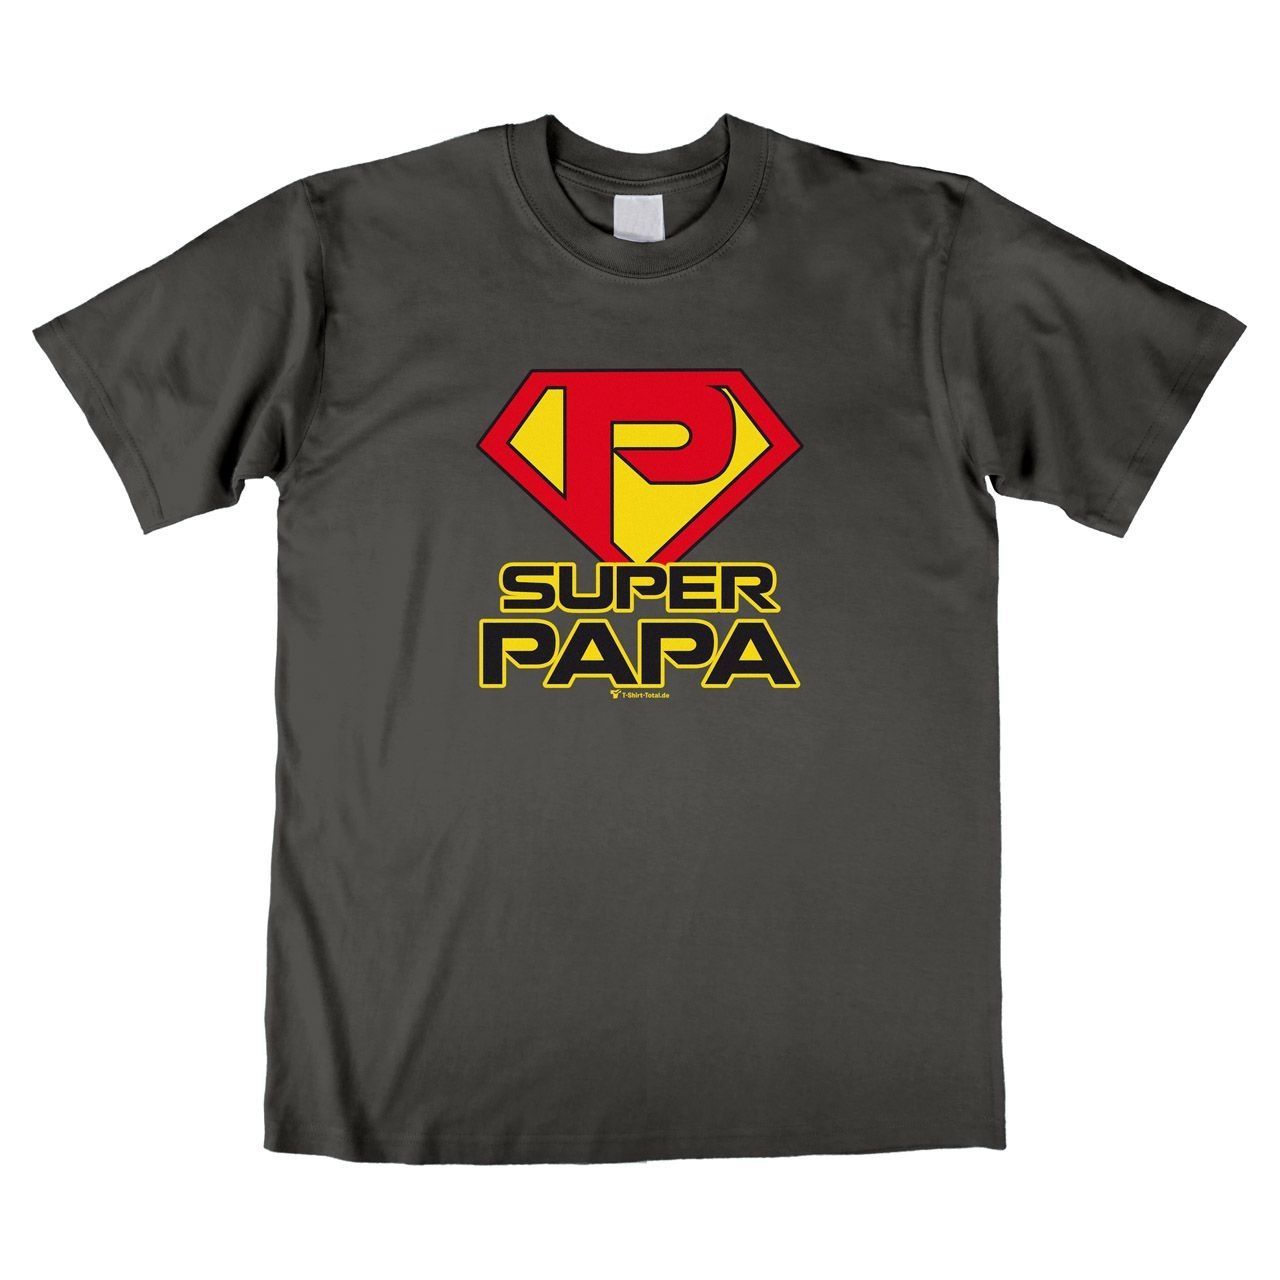 Super Papa Unisex T-Shirt grau Large